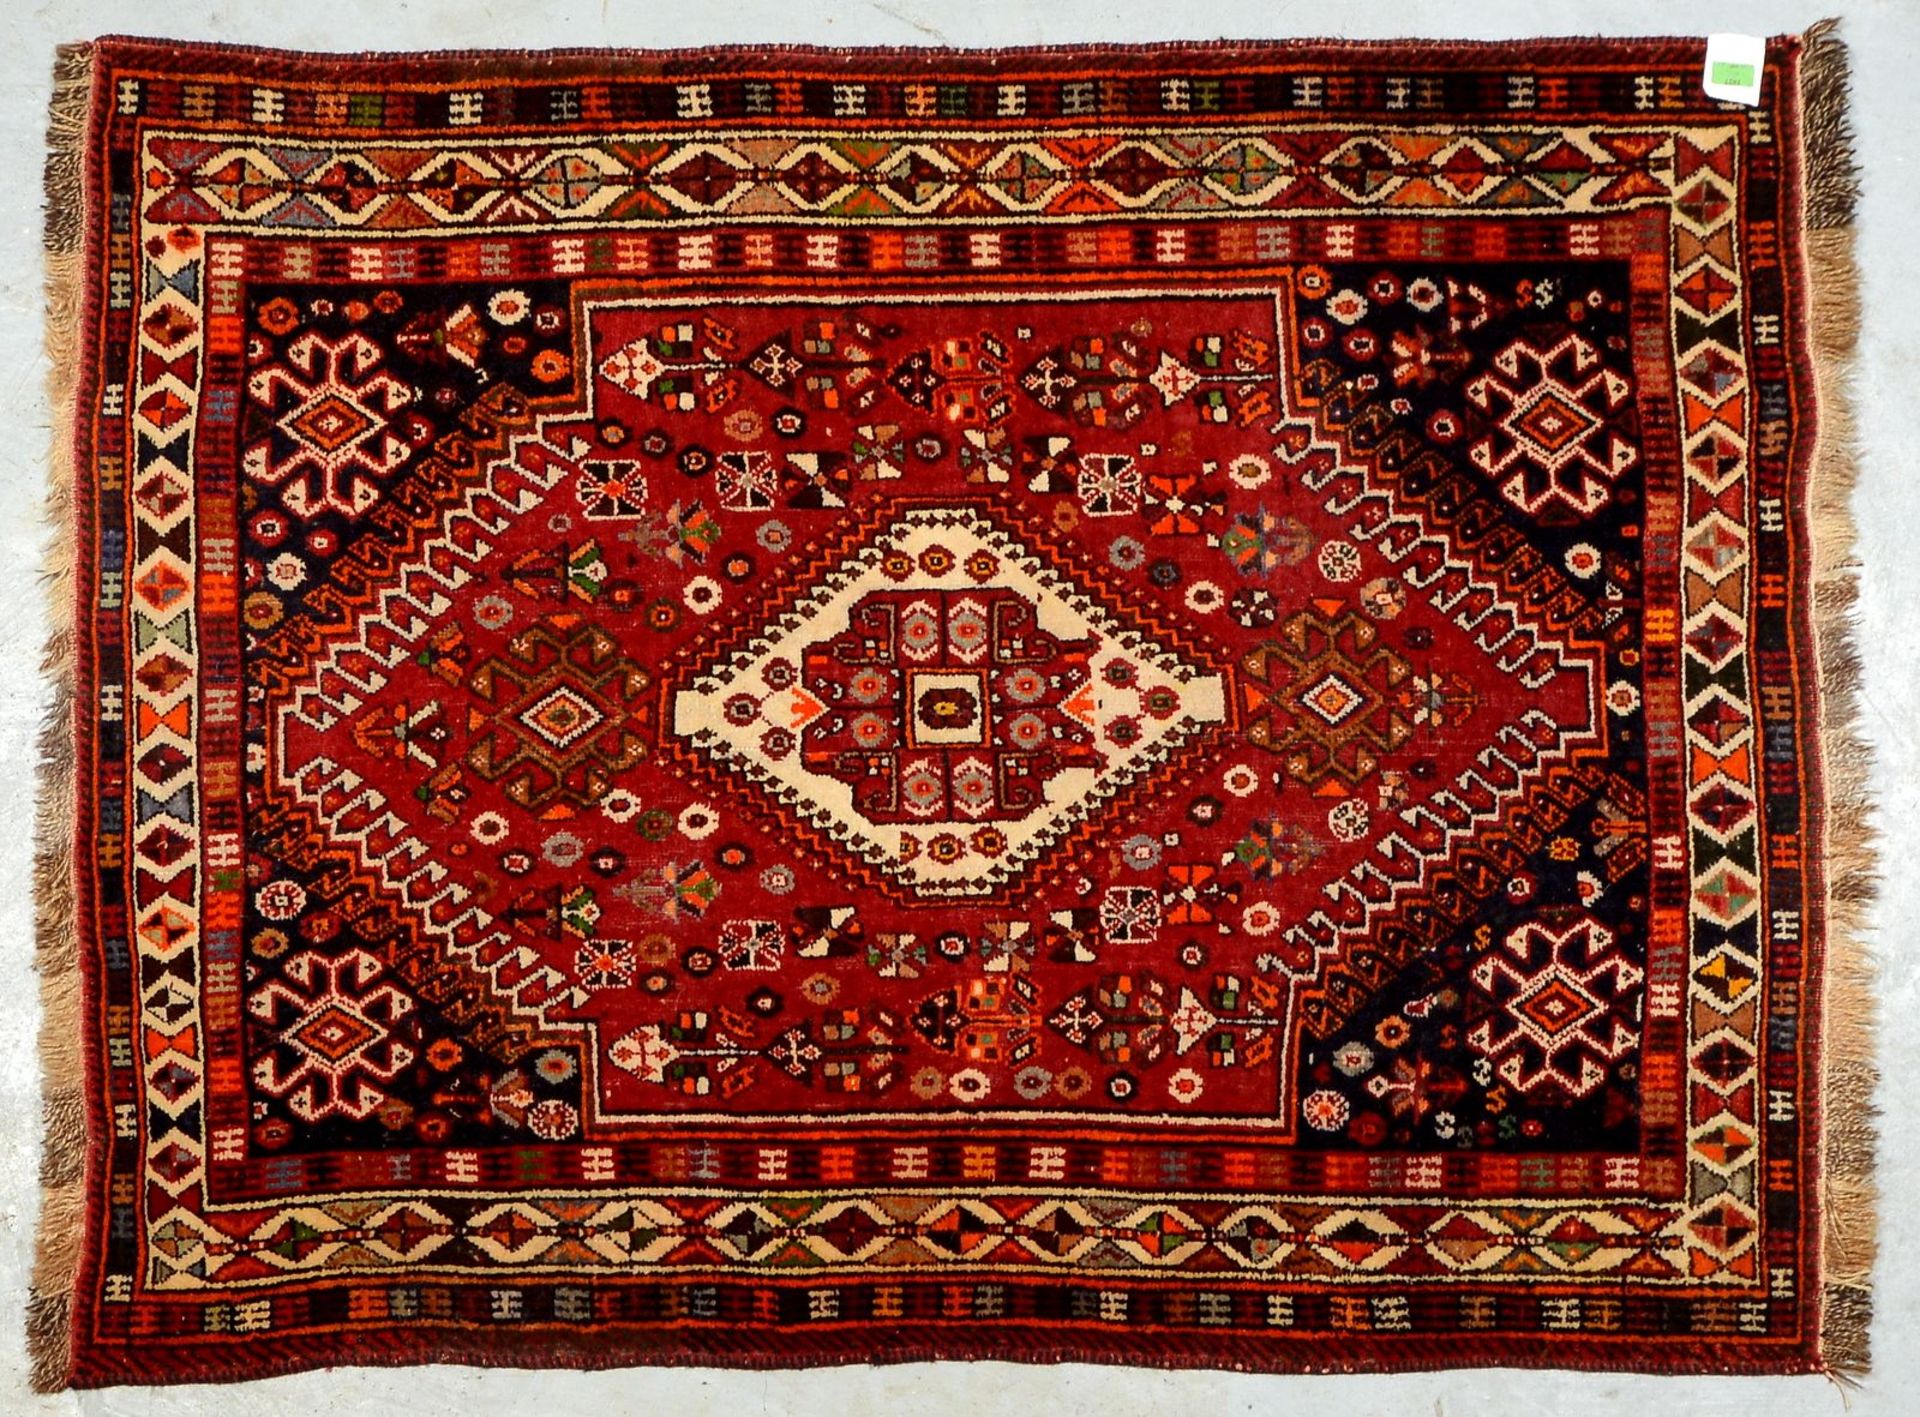 Orientteppich, Wolle auf Ziegenhaar, feste Kn&uuml;pfung; Ma&szlig;e 152 x 115 cm (mit geringsf&uuml